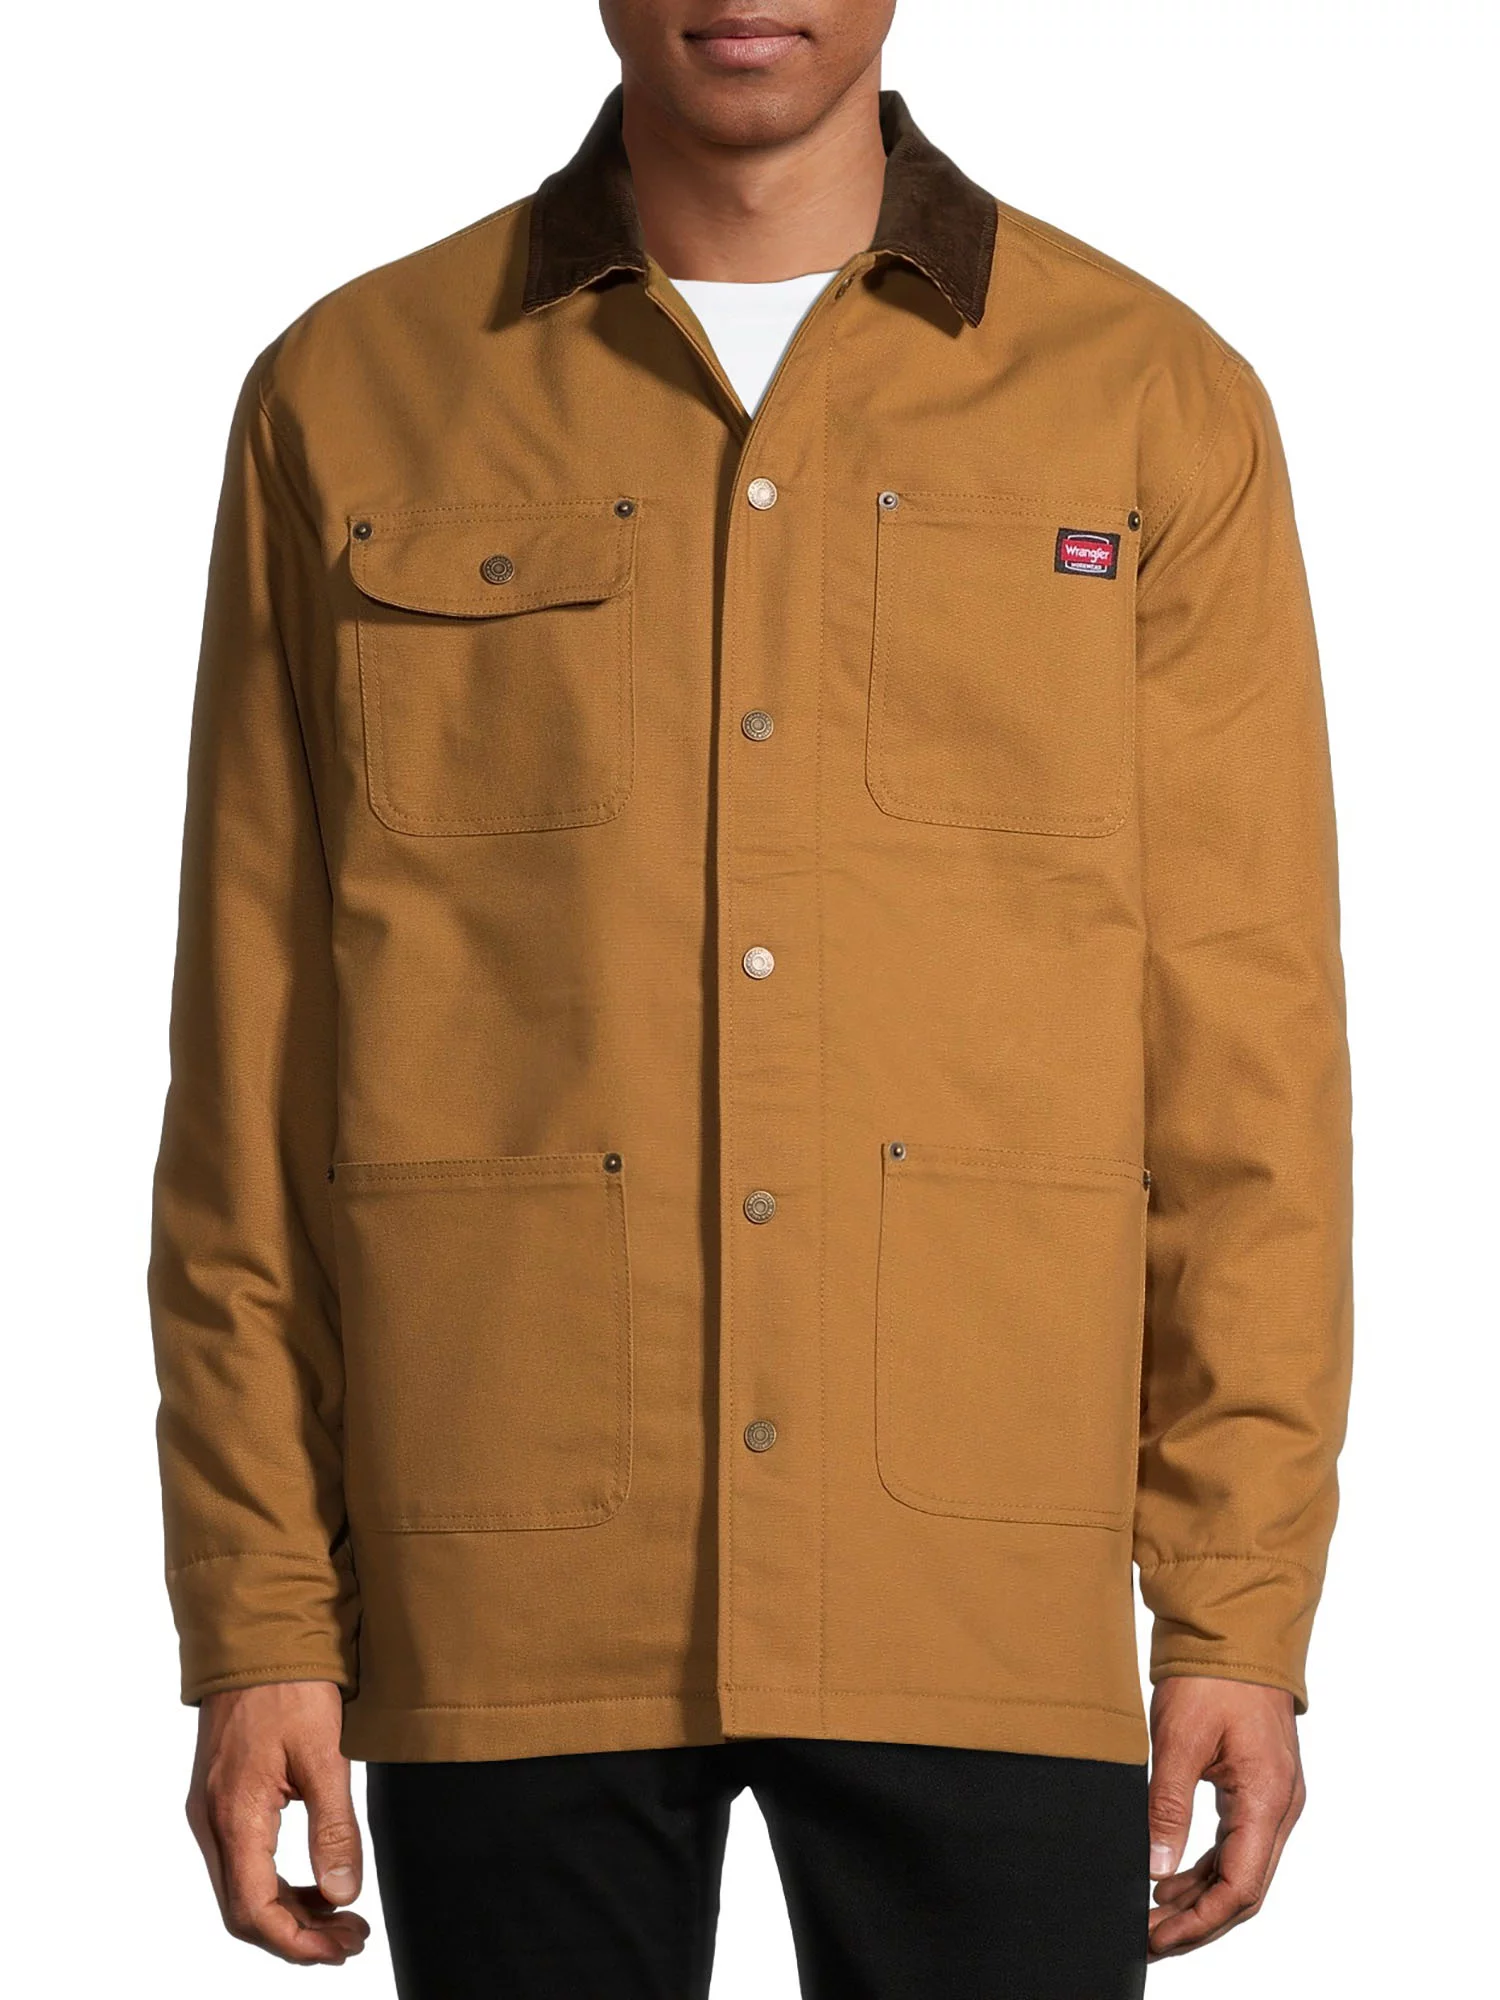 Wrangler Men's Flex Barn Chore Coat Jacket with Warm Durable Blanket Lining